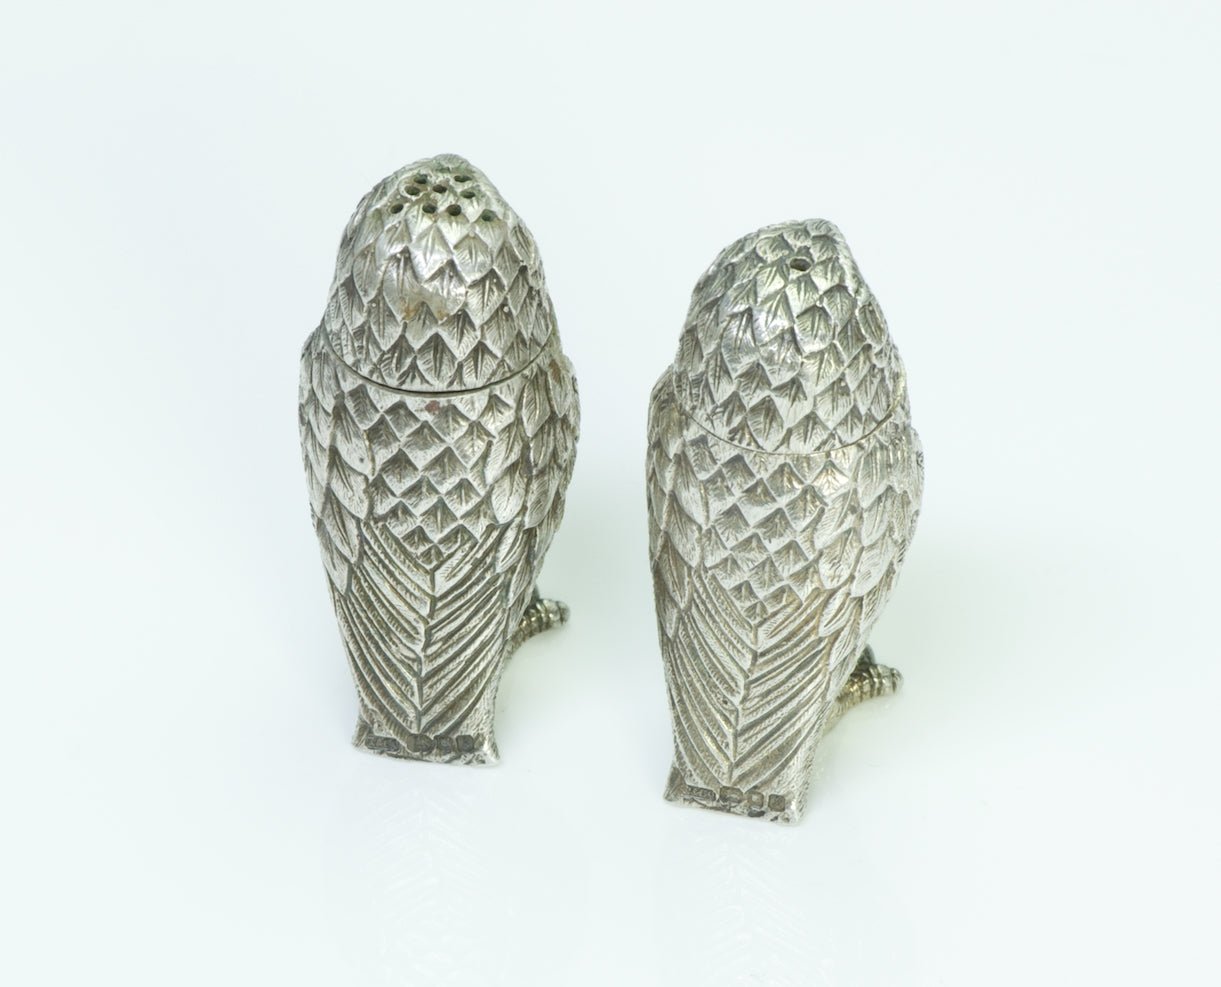 Tiffany & Co. England Vintage Silver Owl Salt & Pepper Shakers